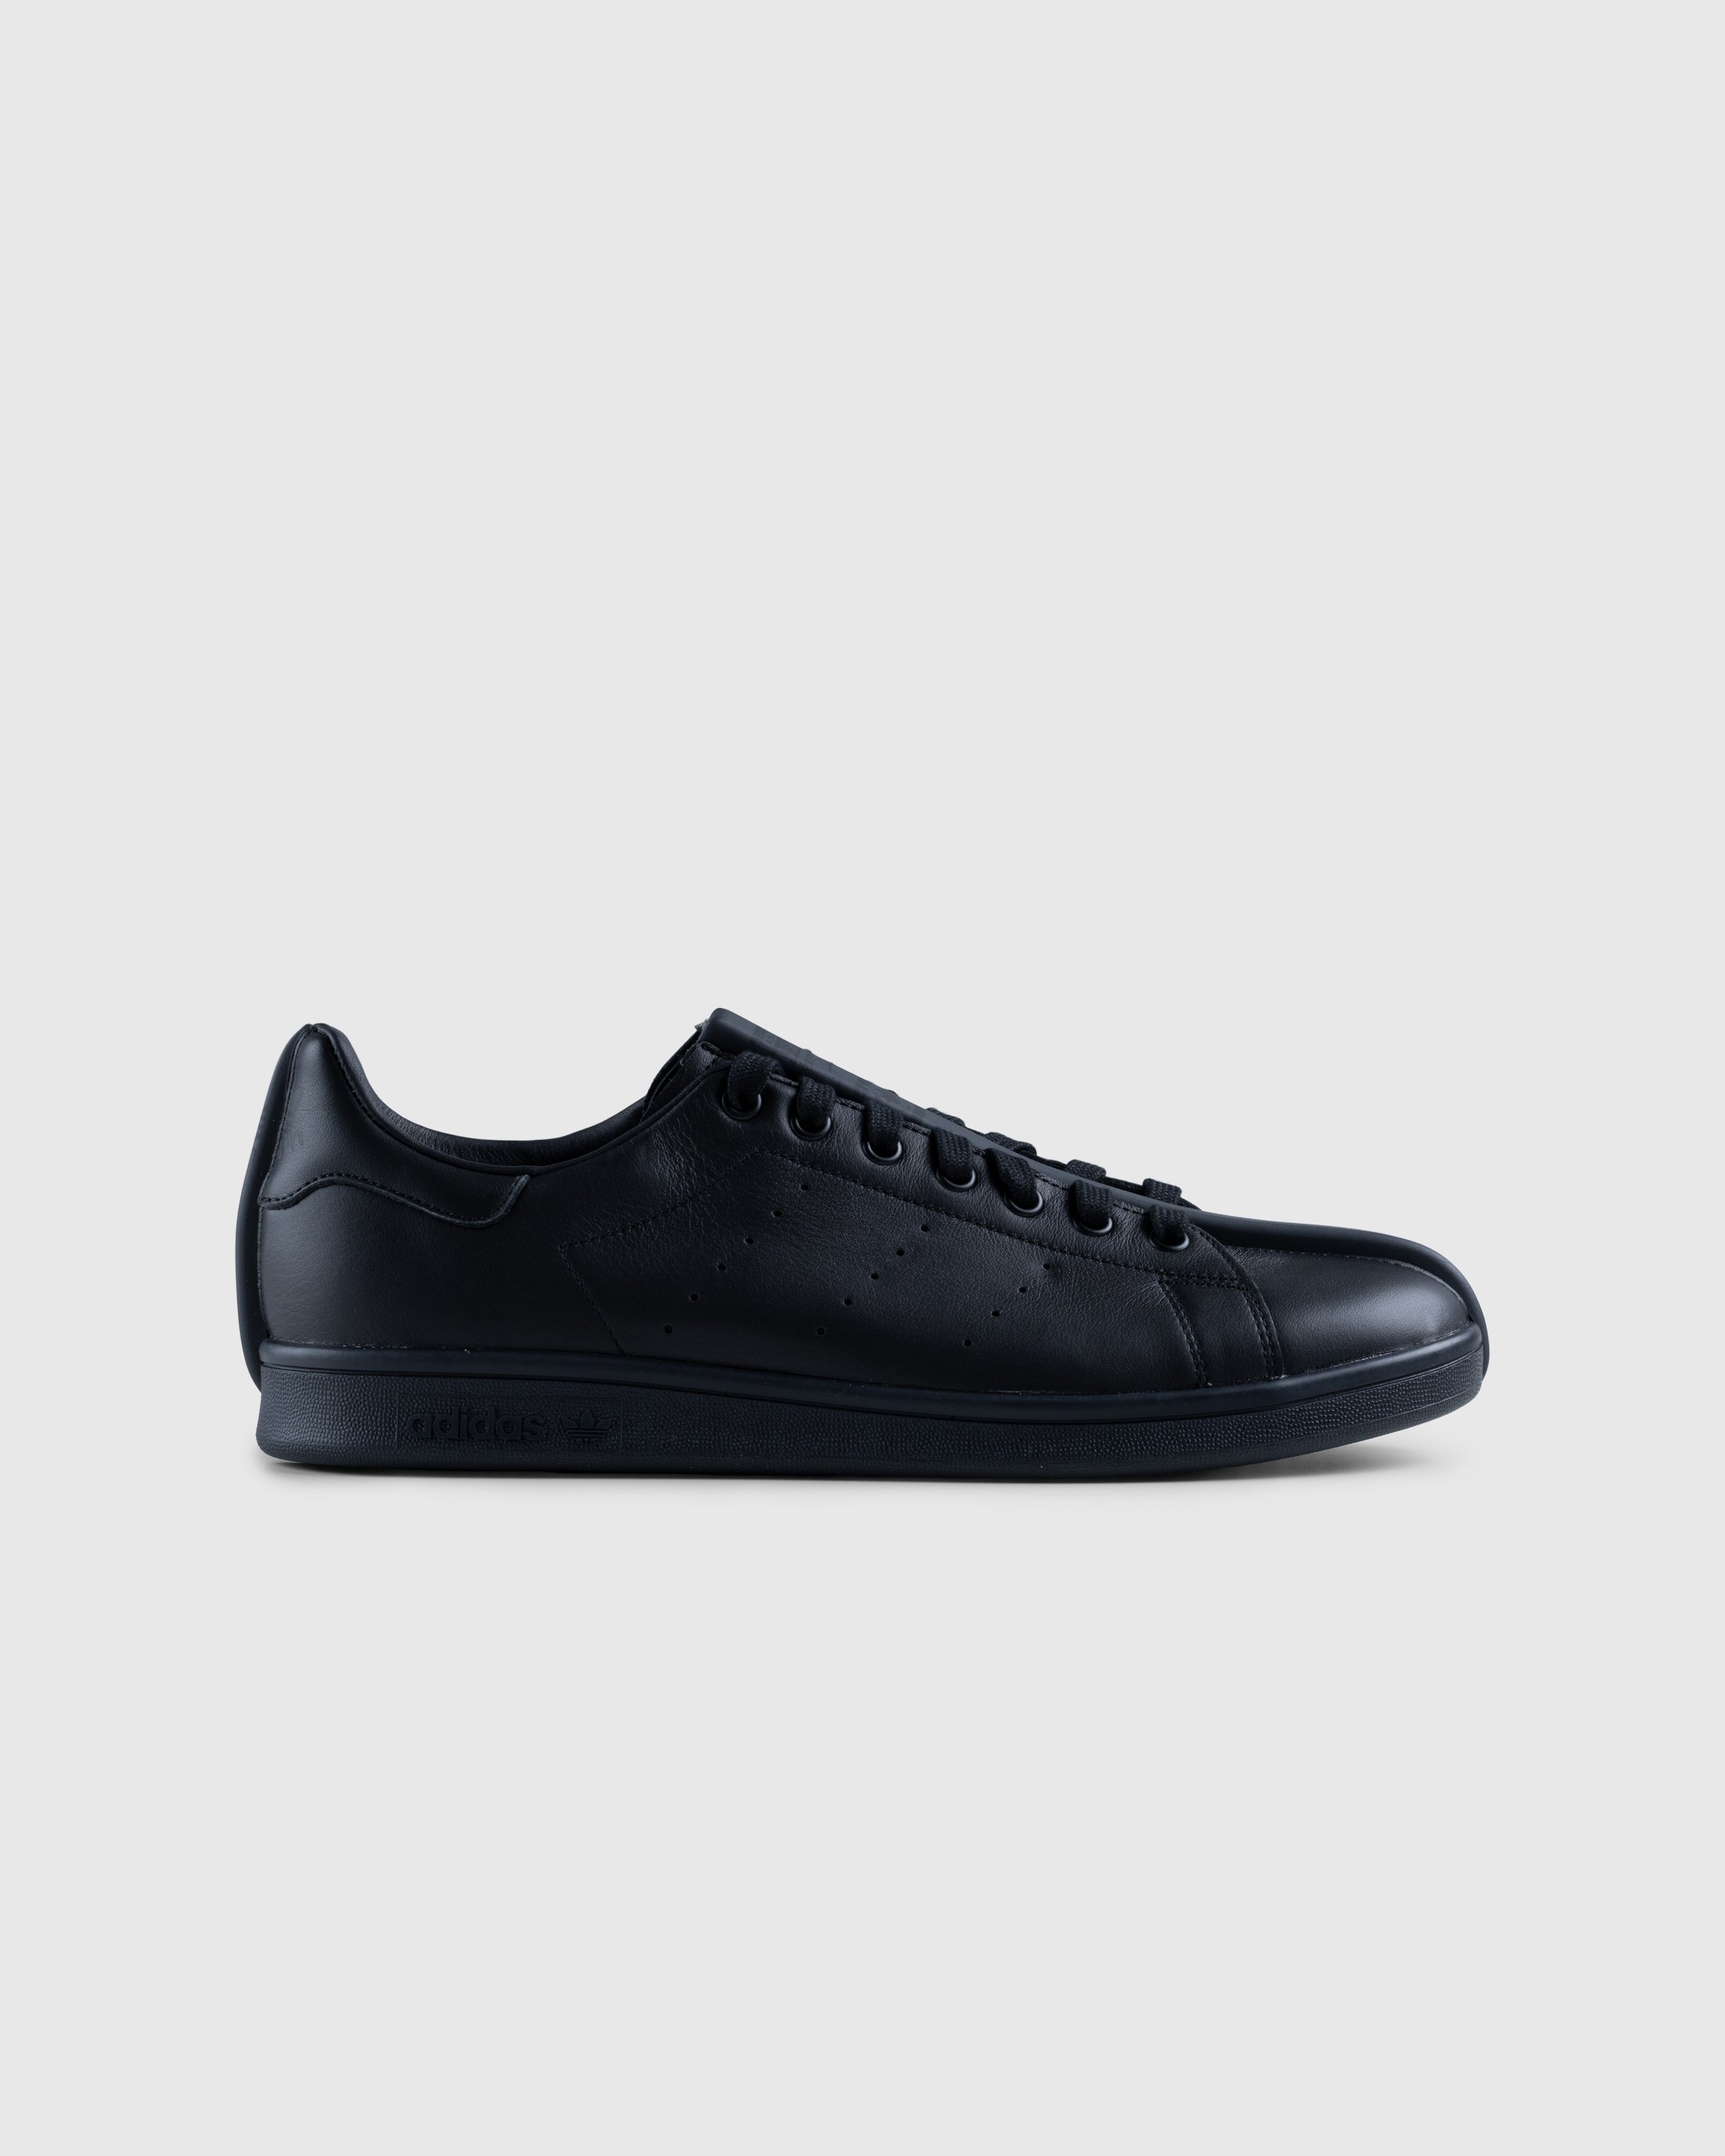 Craig Green x Adidas – CG Split Stan Smith Core Black/Granite - Sneakers - Black - Image 1